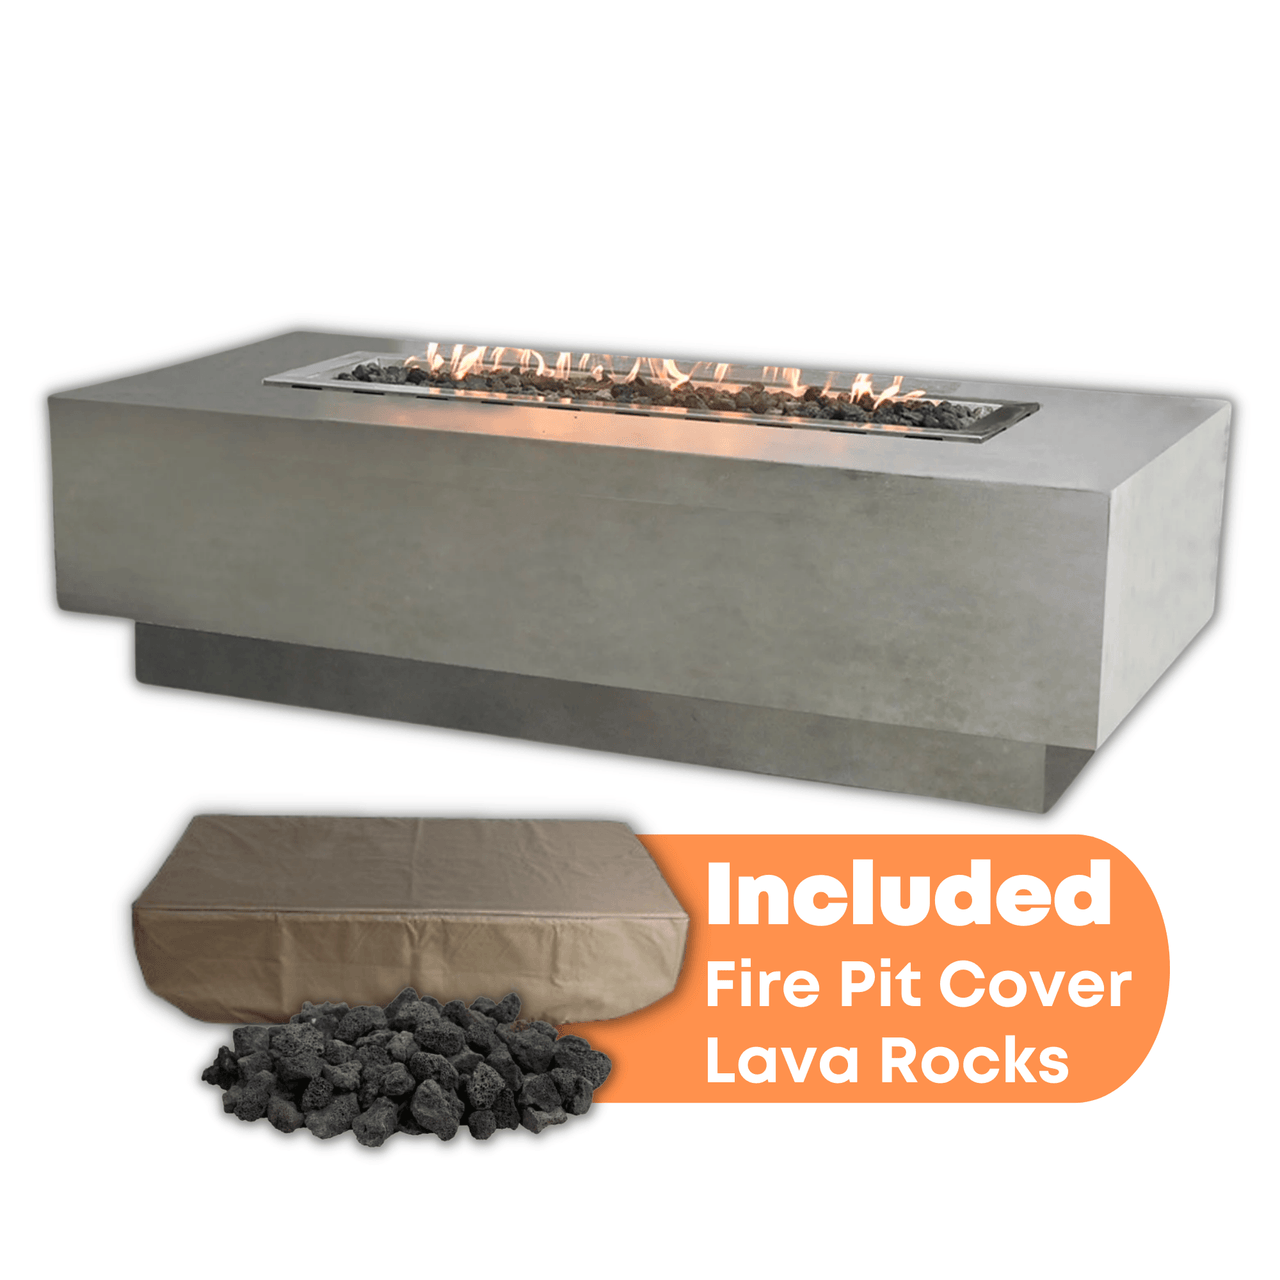 Elementi - Granville Rectangular Concrete Fire Pit Table OFG121 - Fire Pit Stock